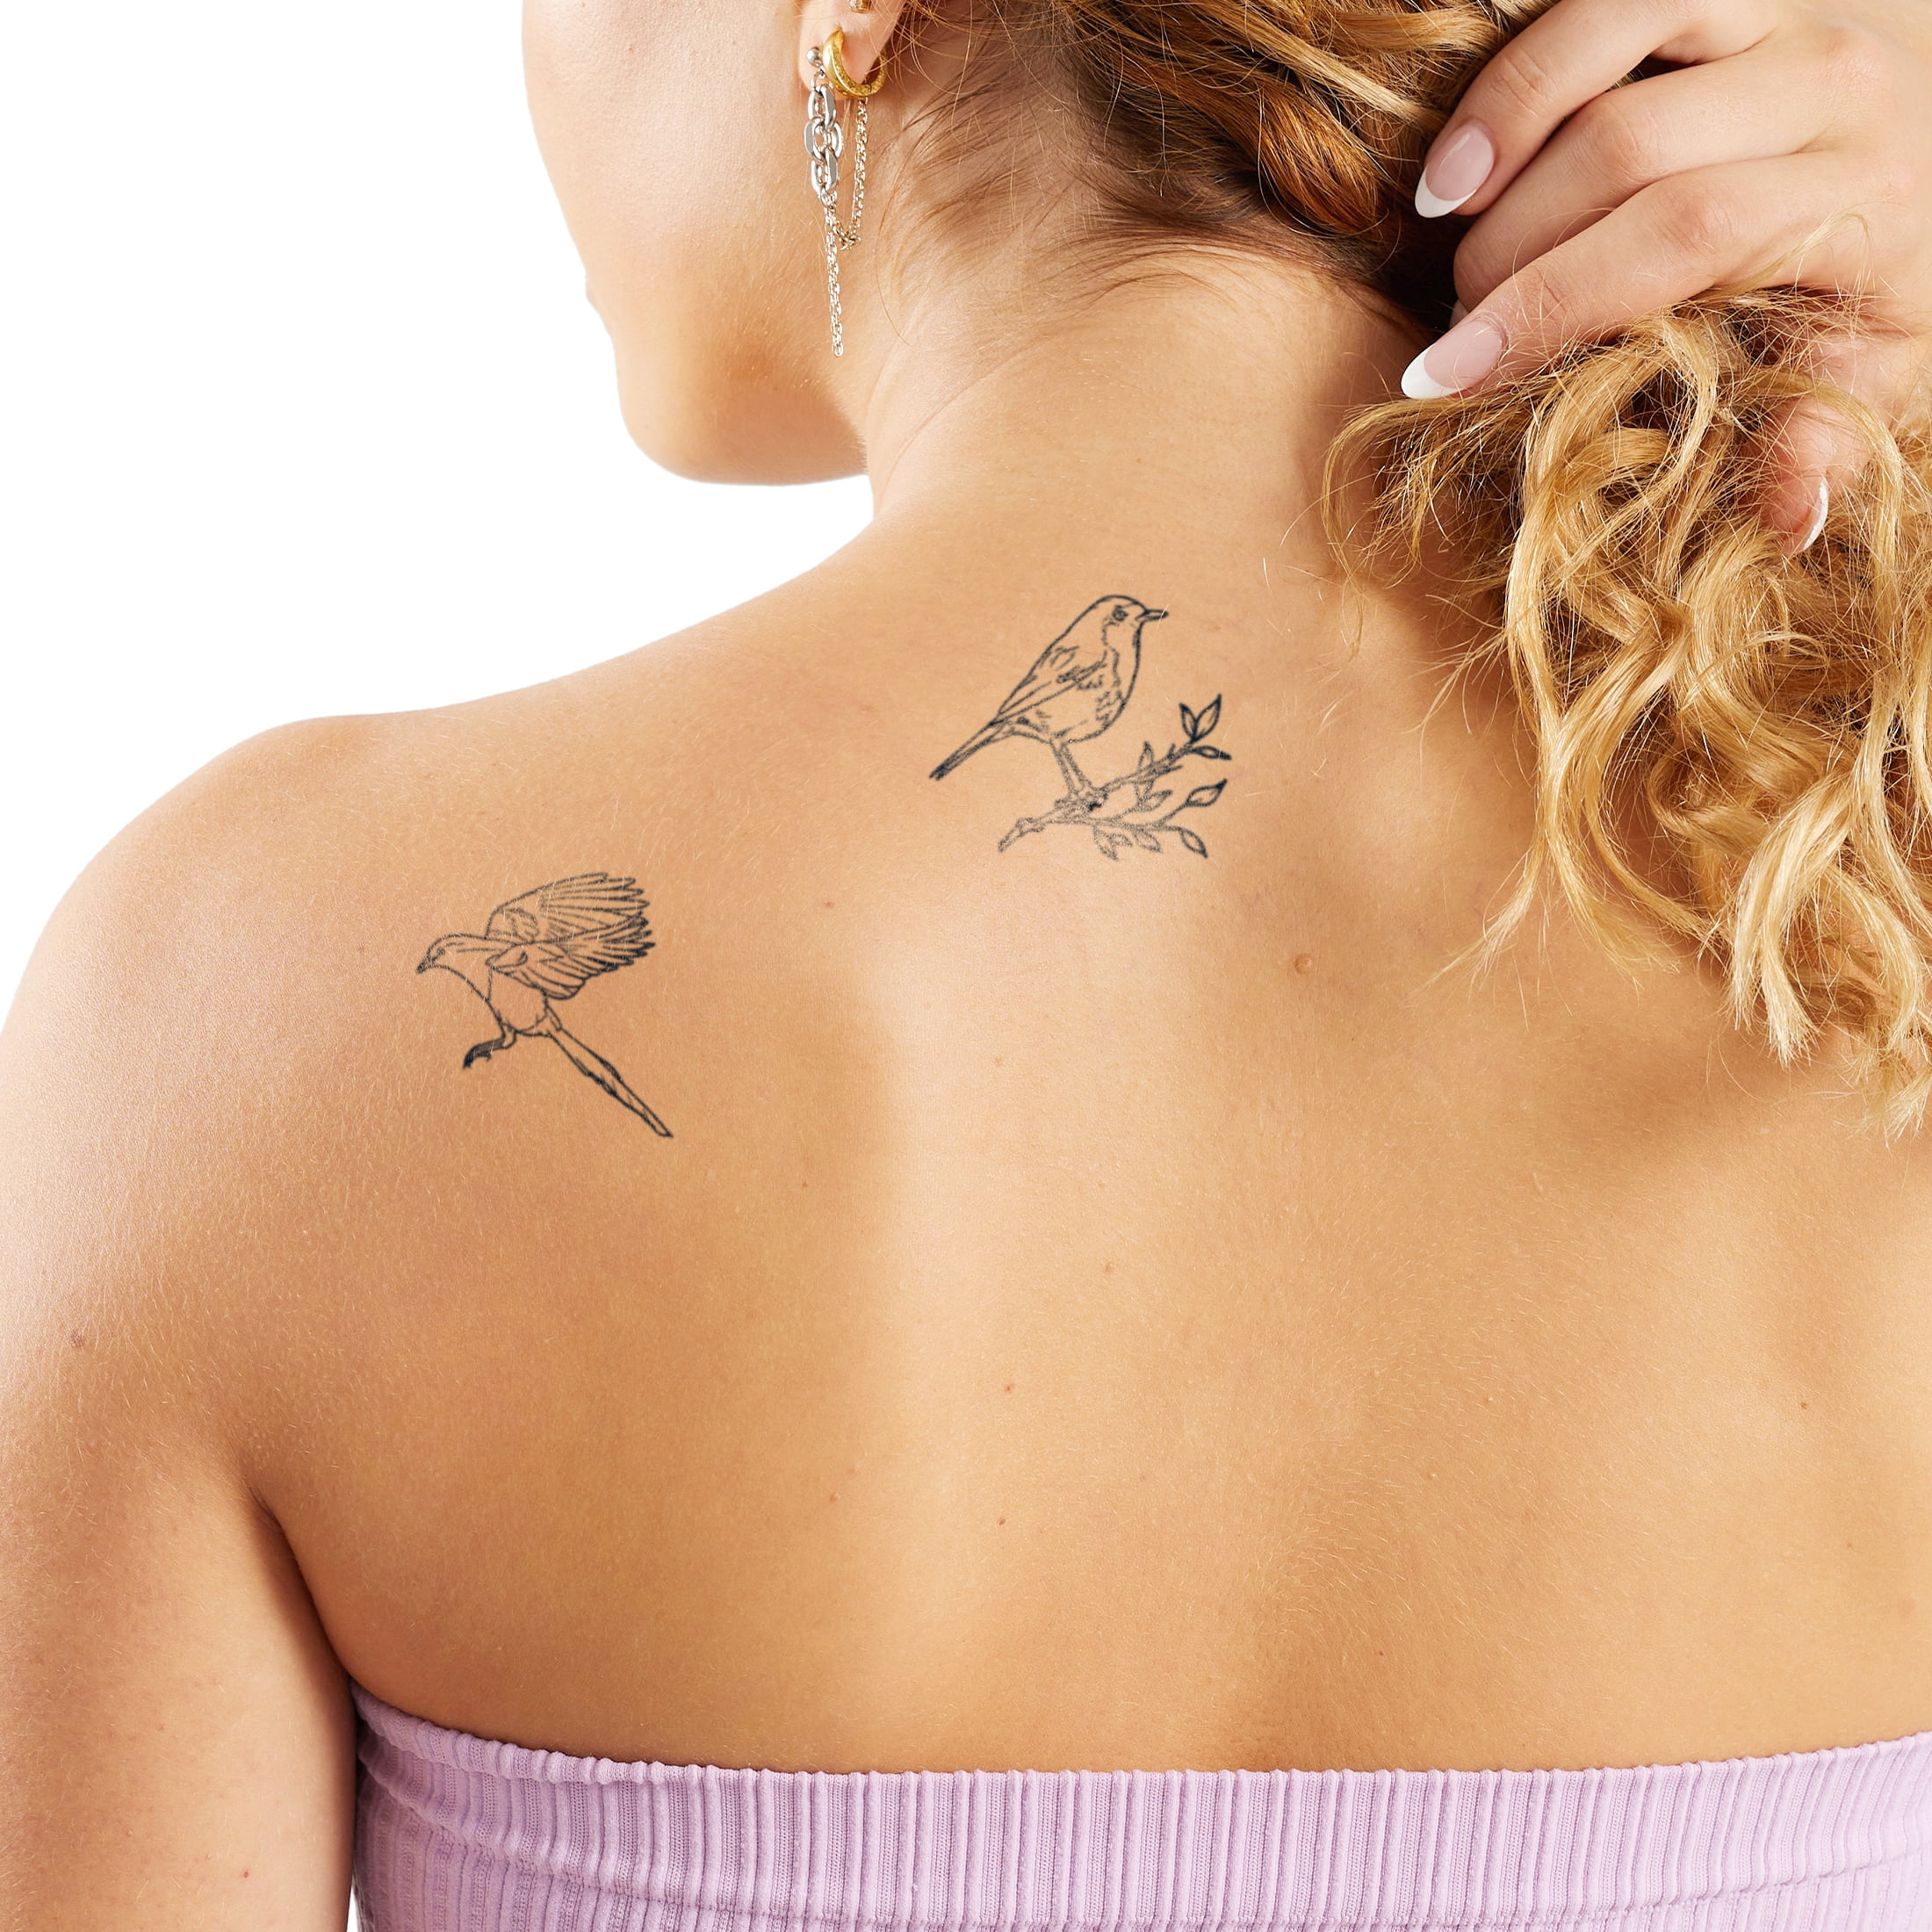 Neck tattoos ya bish!!' #tattoo#necktattoos#fortworth#323#… | Flickr